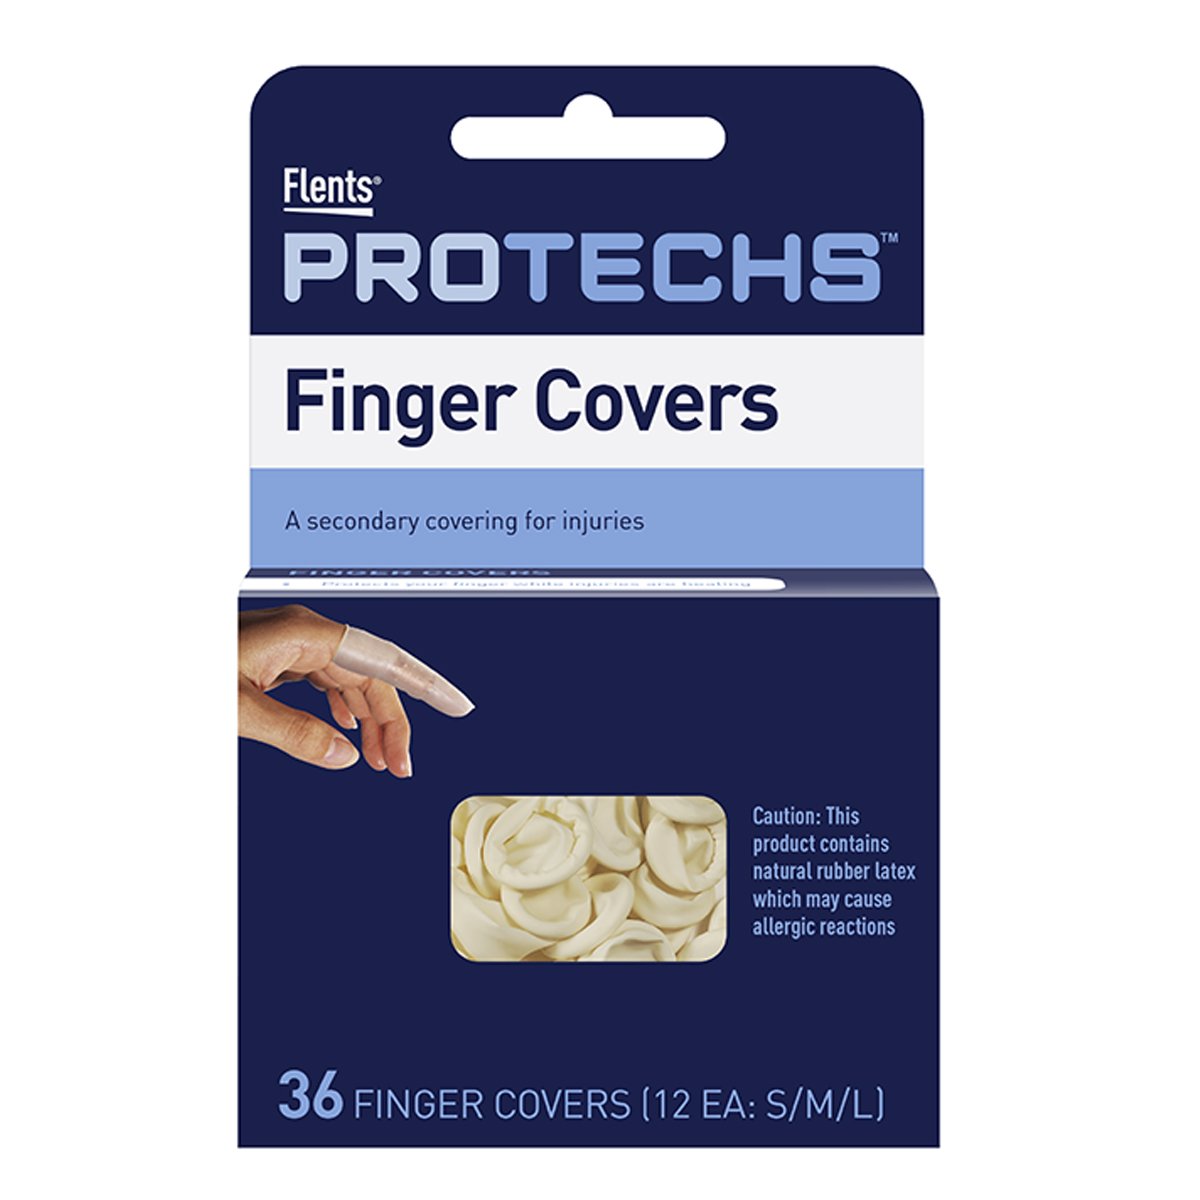 Flents Finger Covers Kits & at H-E-B